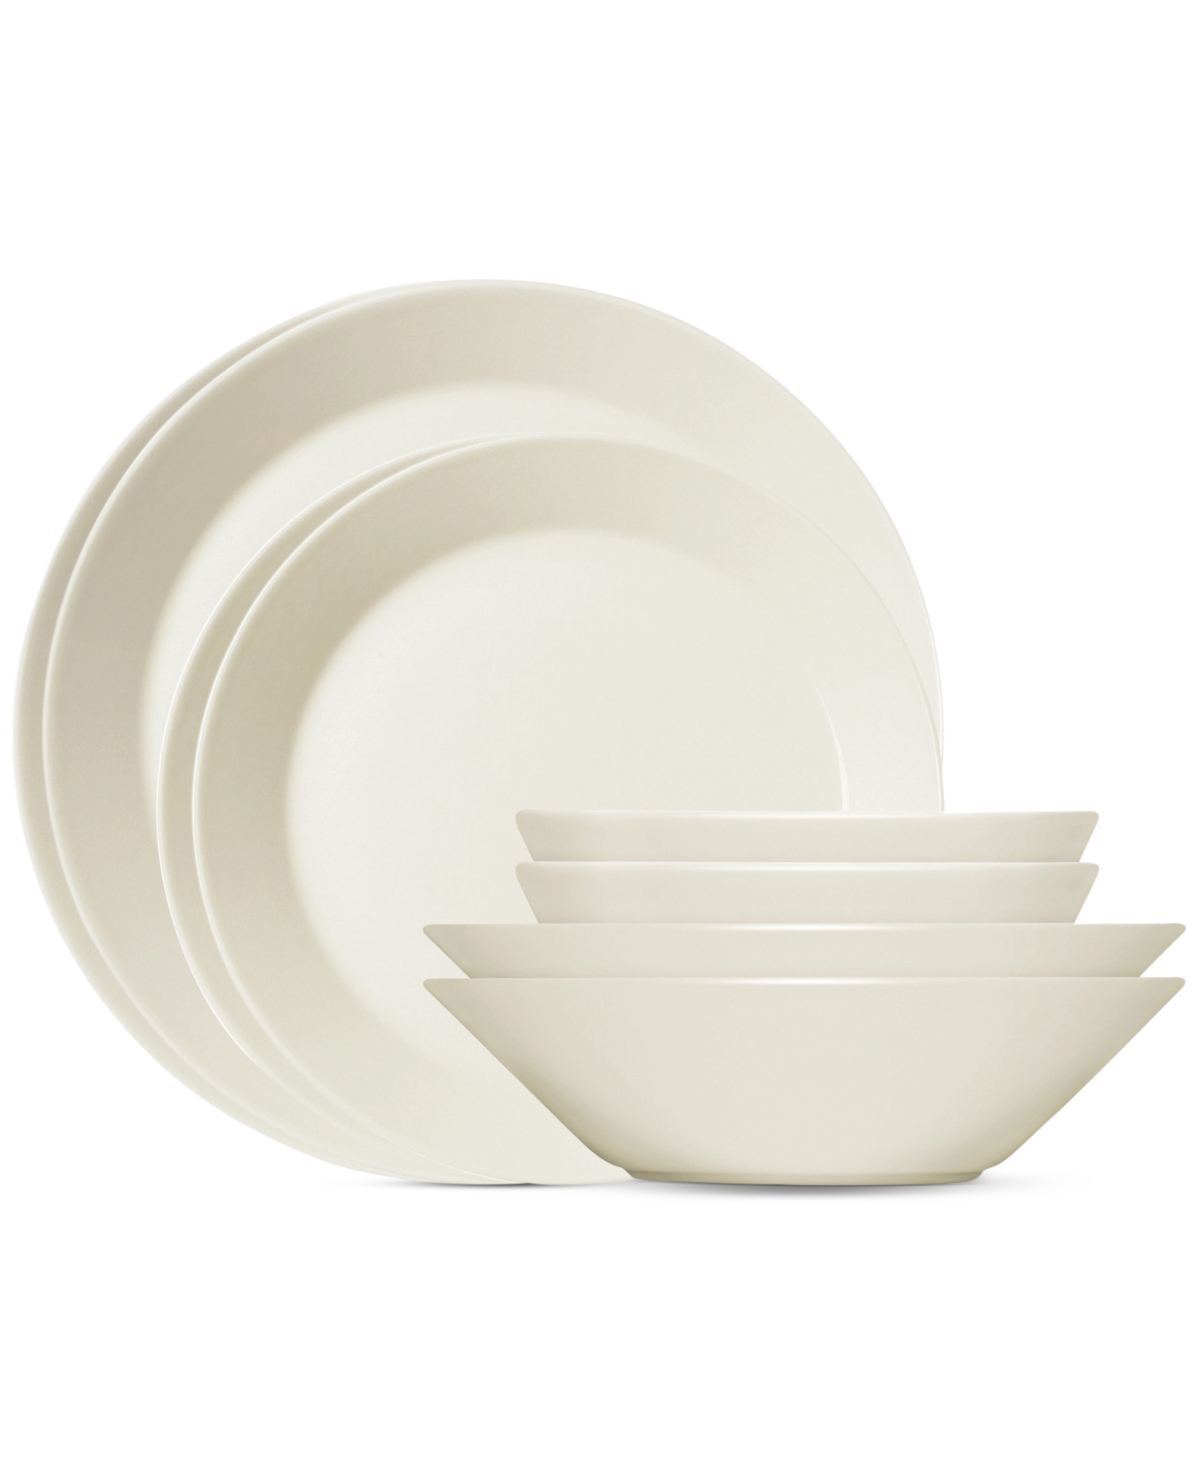 Teema White 16-Pc. Starter Dinnerware Set, Service For 4 - White